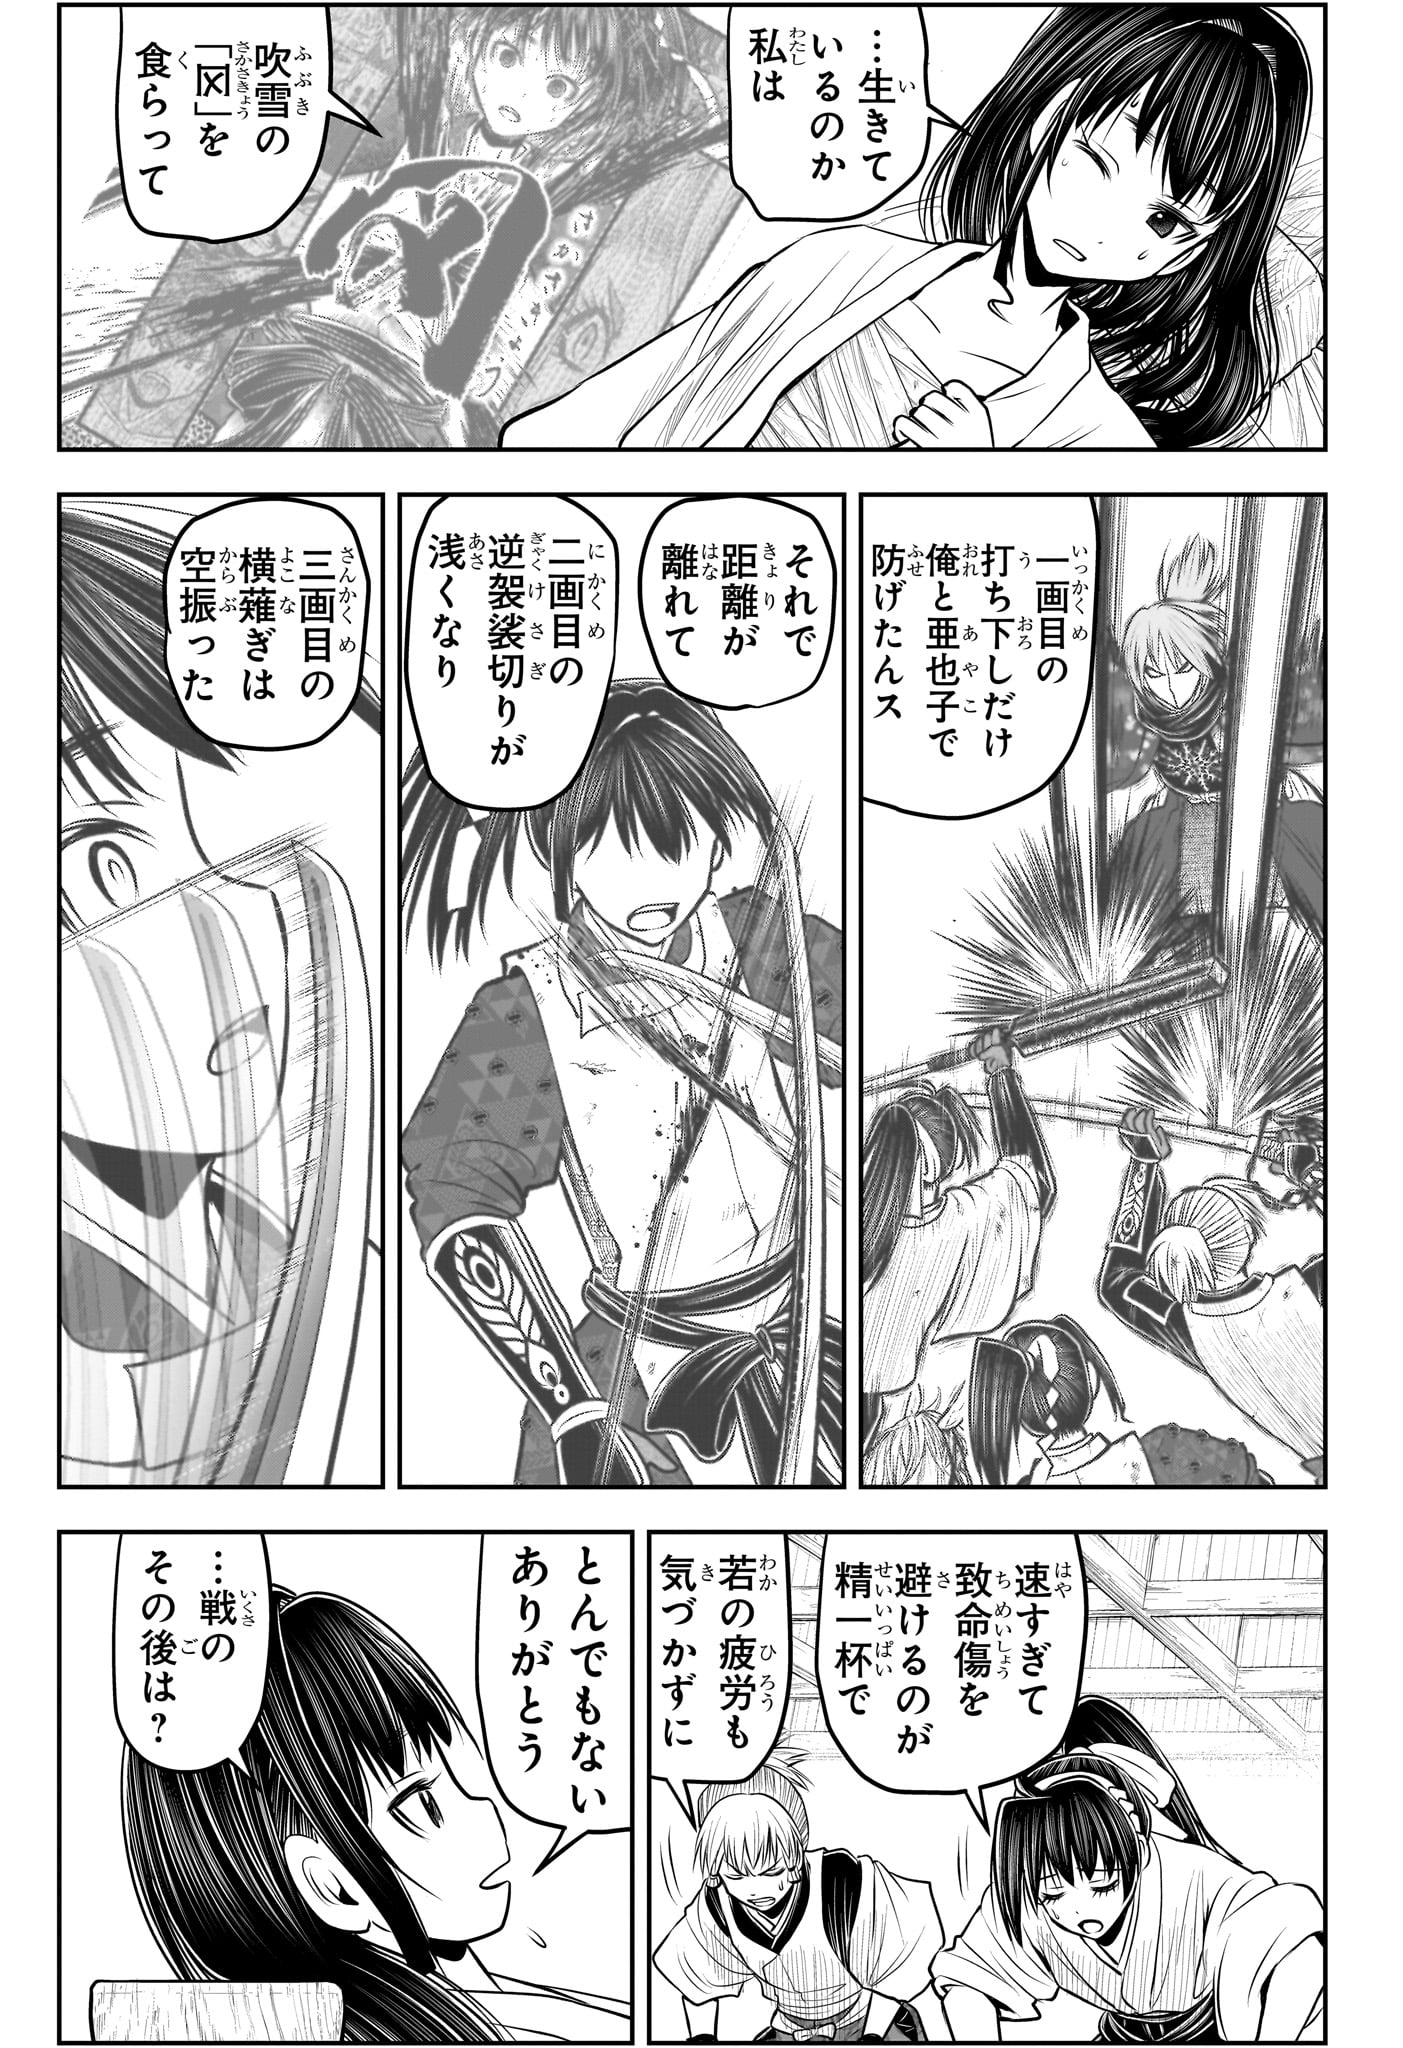 Nige Jouzu no Wakagimi - Chapter 148 - Page 3